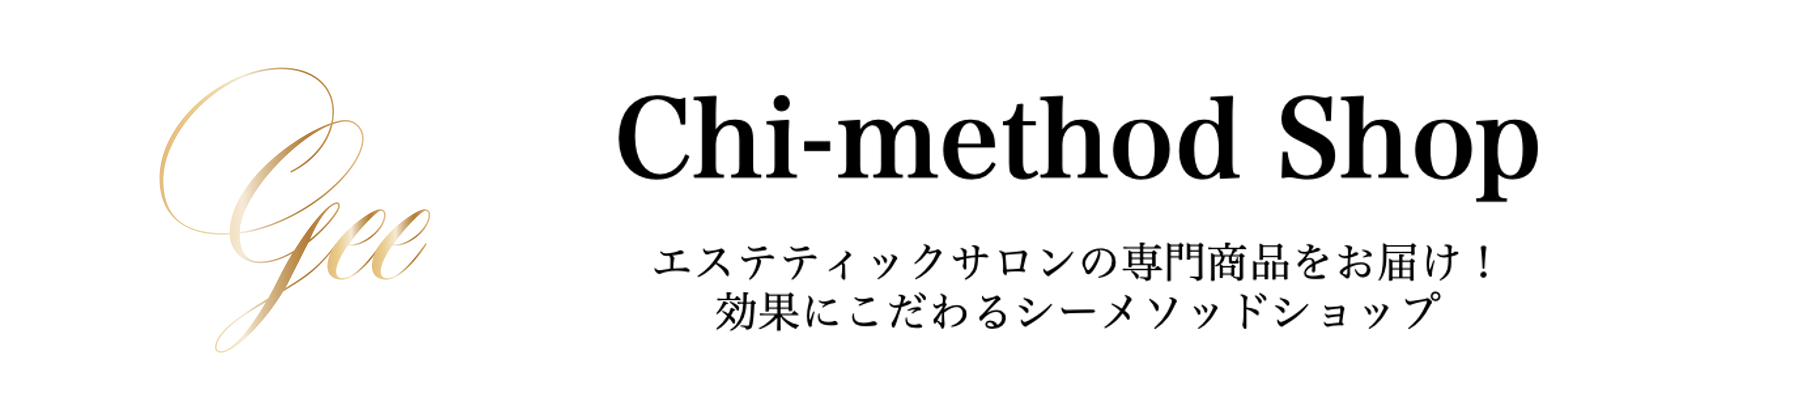 Chi-method Shop - セルケア化粧品 - Produced by Chi-method Partner